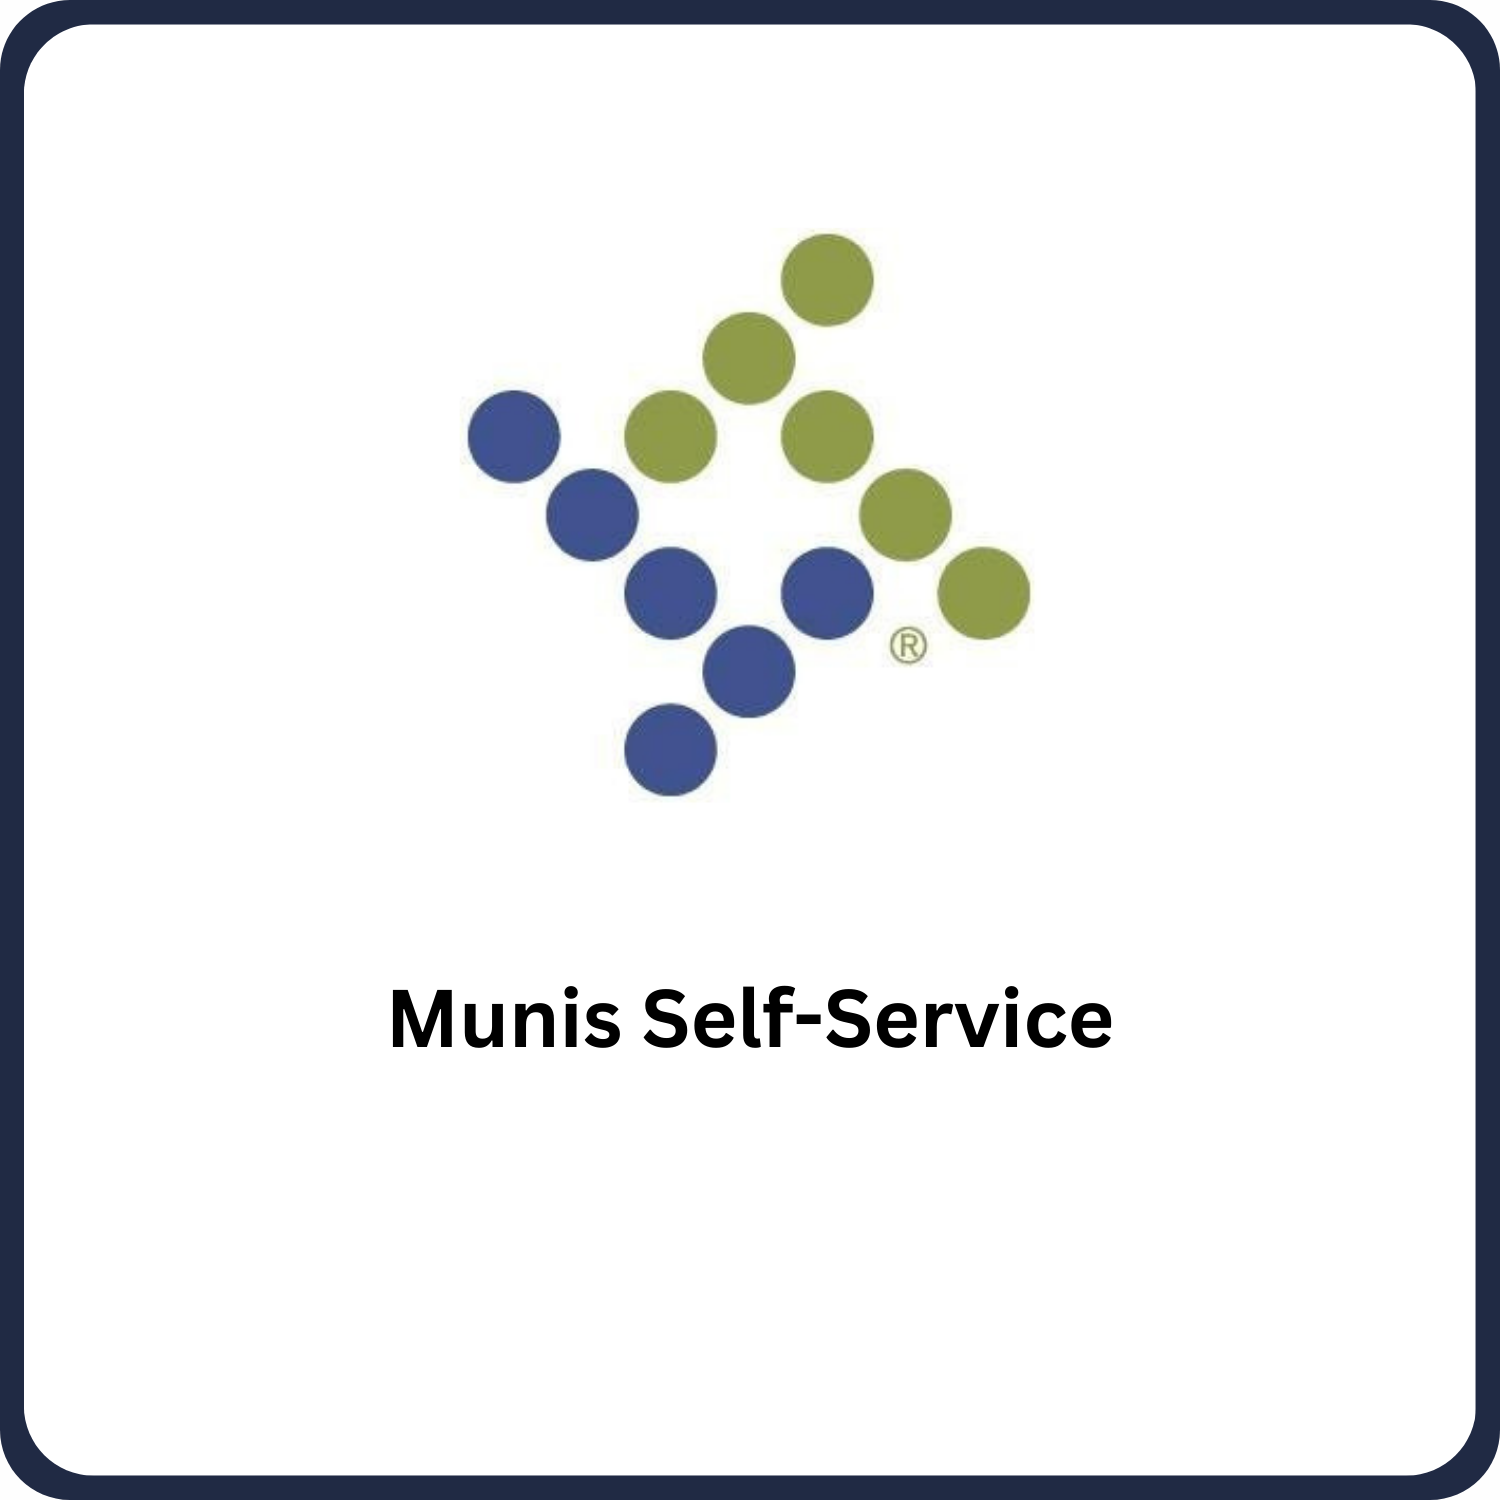 MUNIS Self-Service